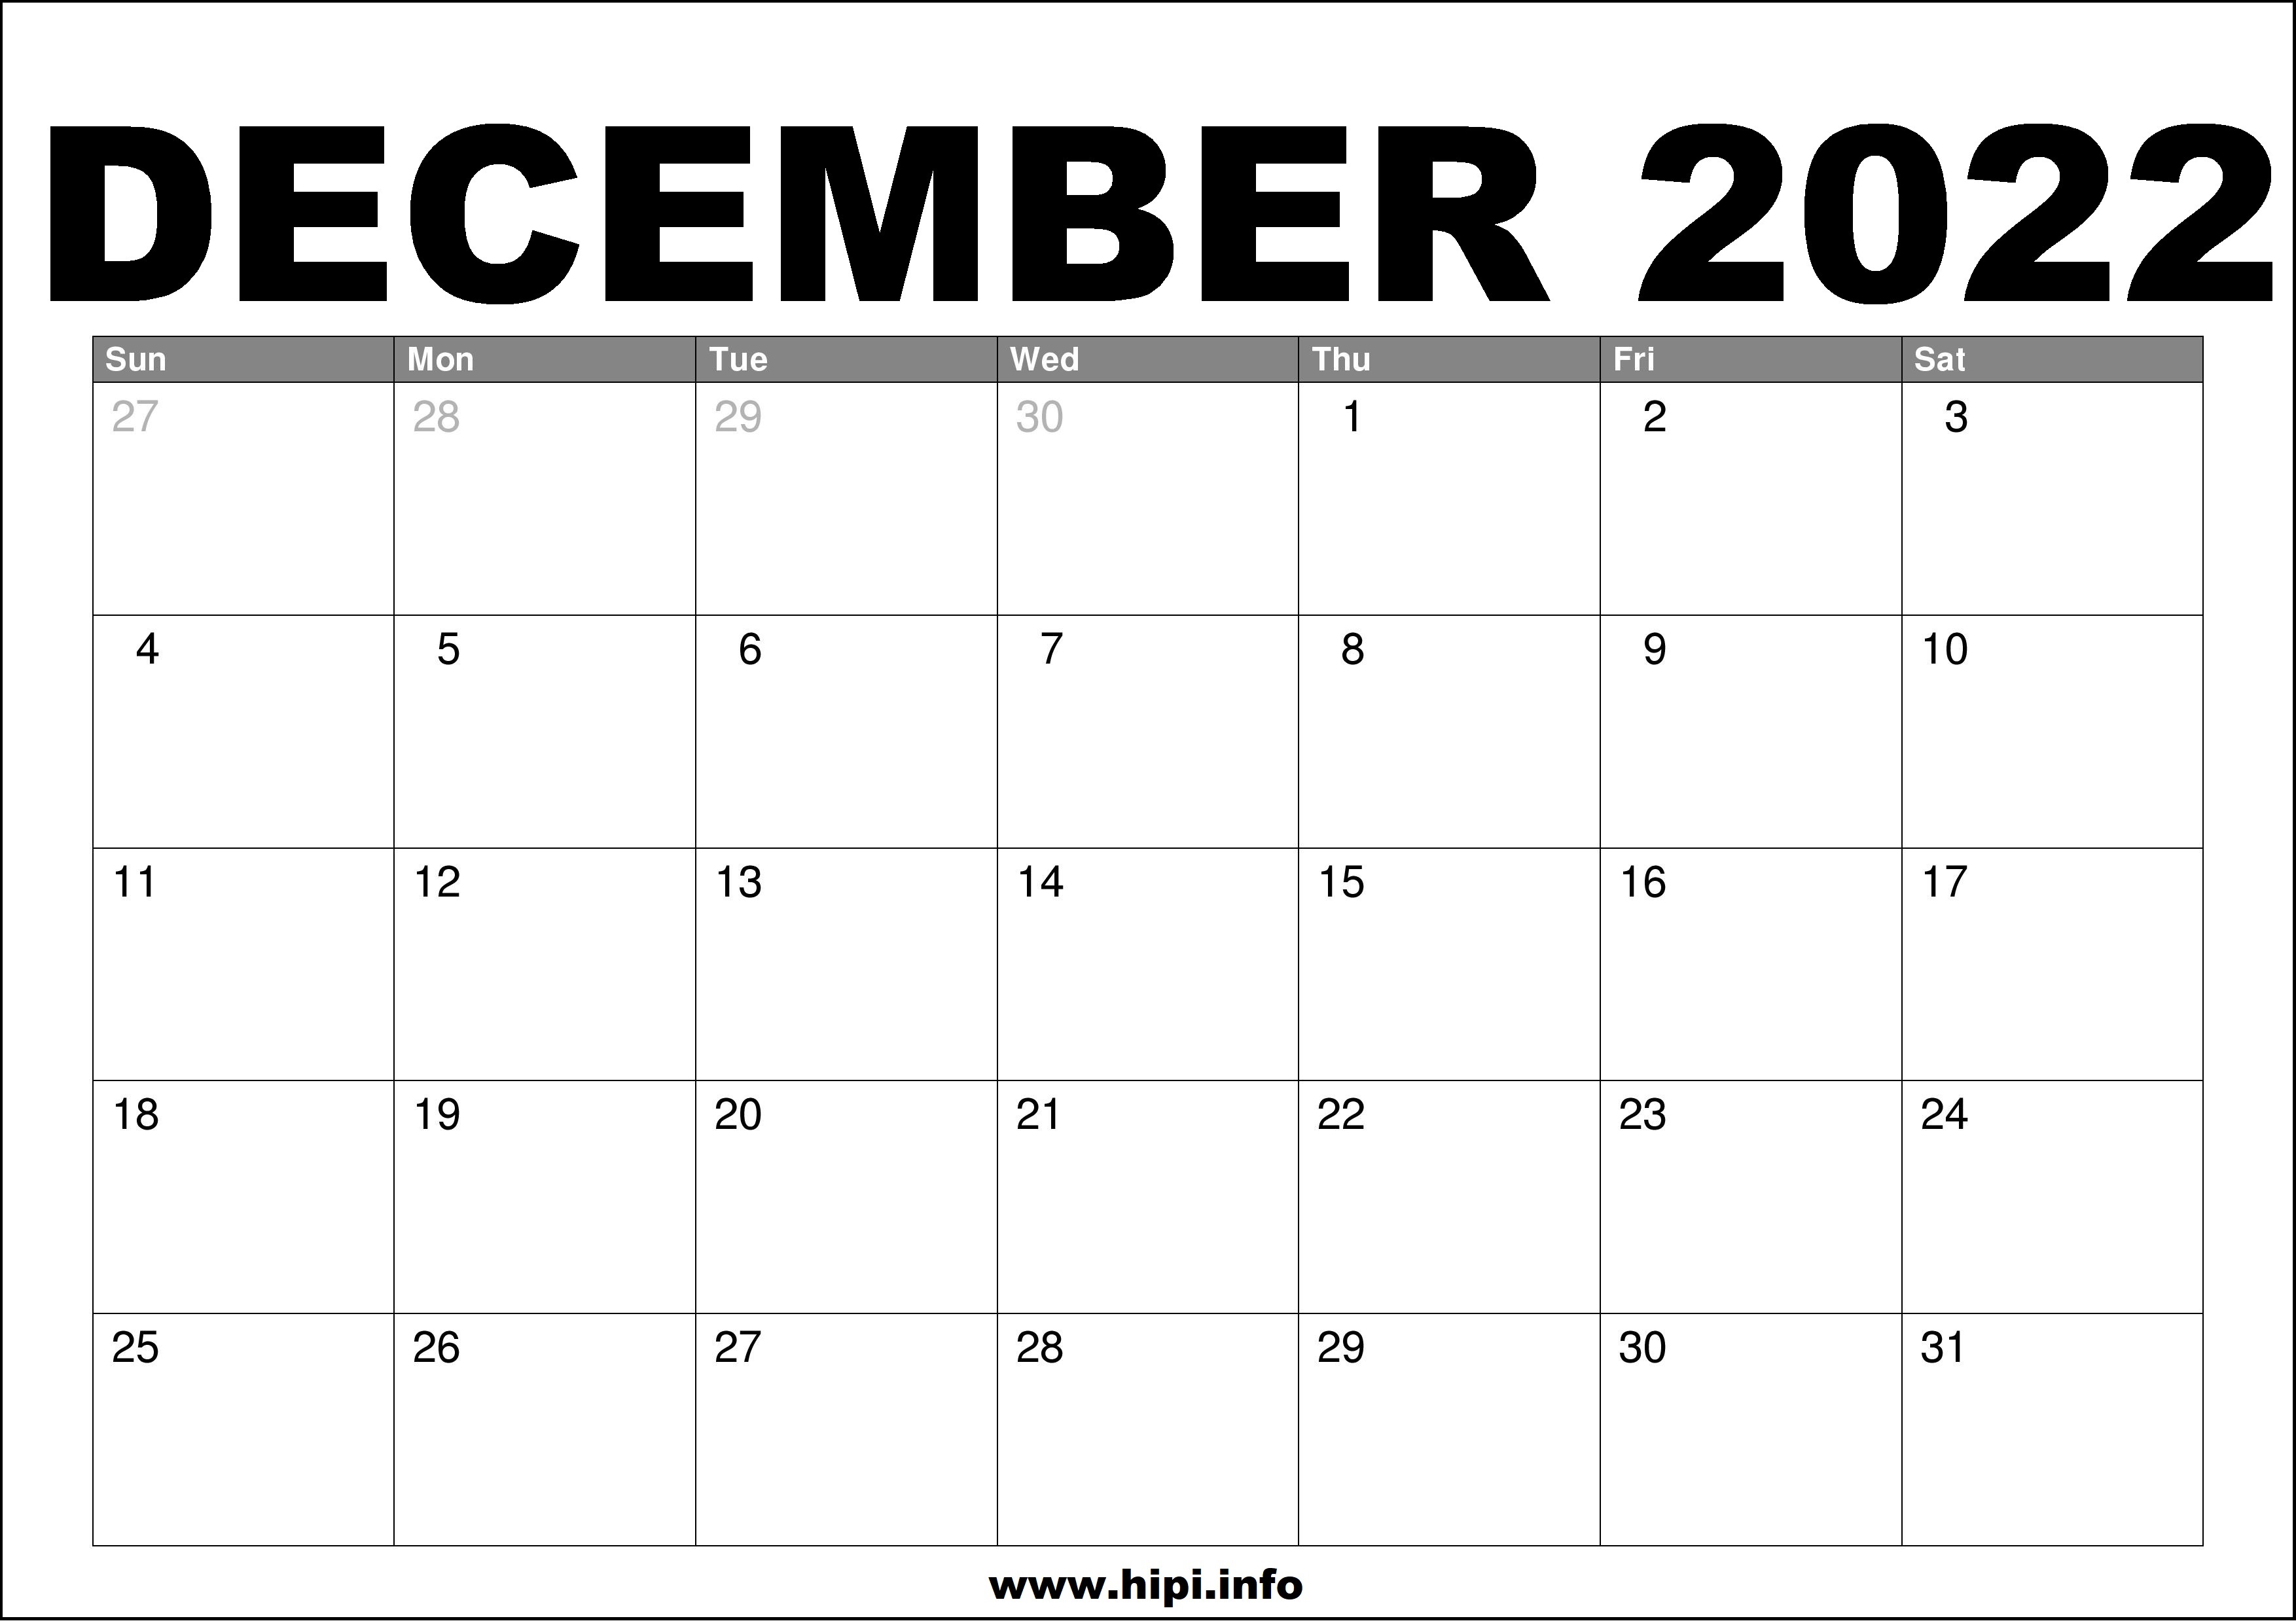 Dec 2022 Calendar Printable December 2022 Calendar Printable Free - Hipi.info | Calendars Printable Free